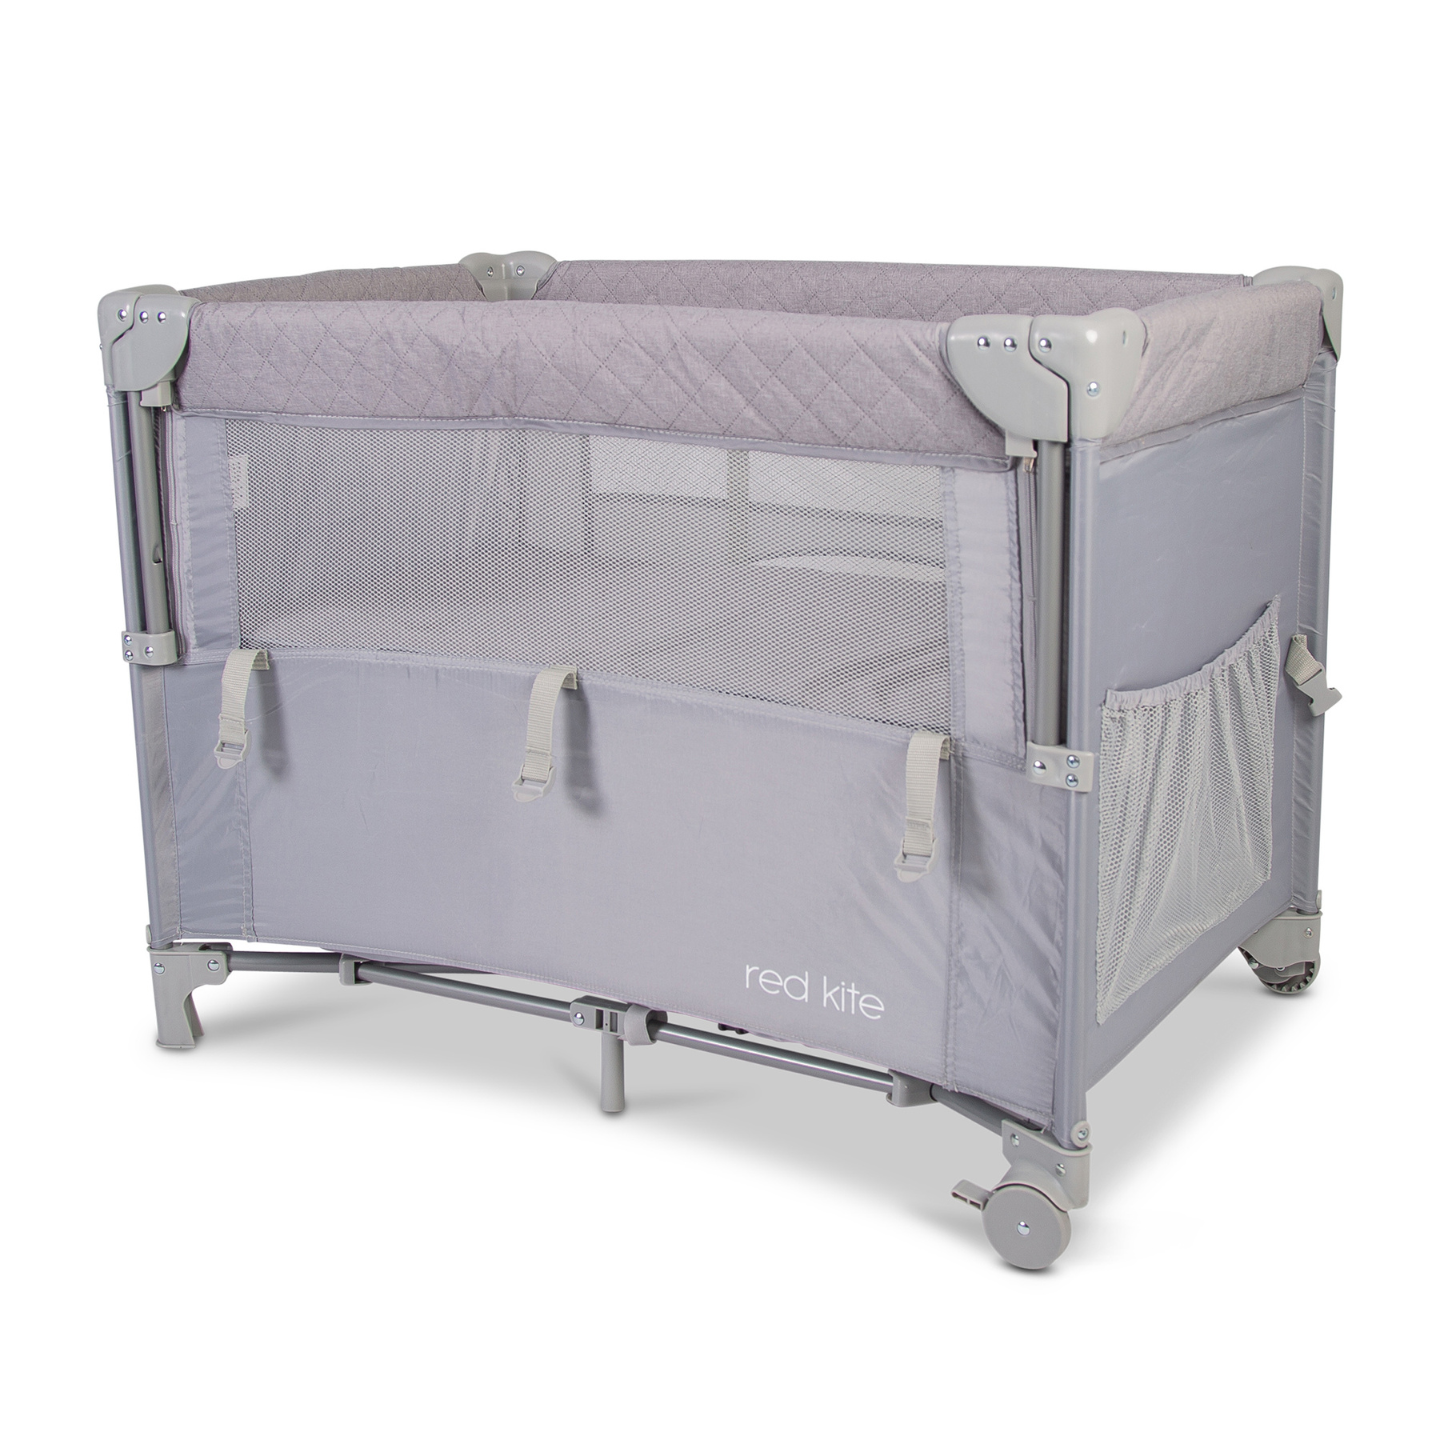 Redkite Dreamer Bedside Crib With Newborn Bassinette